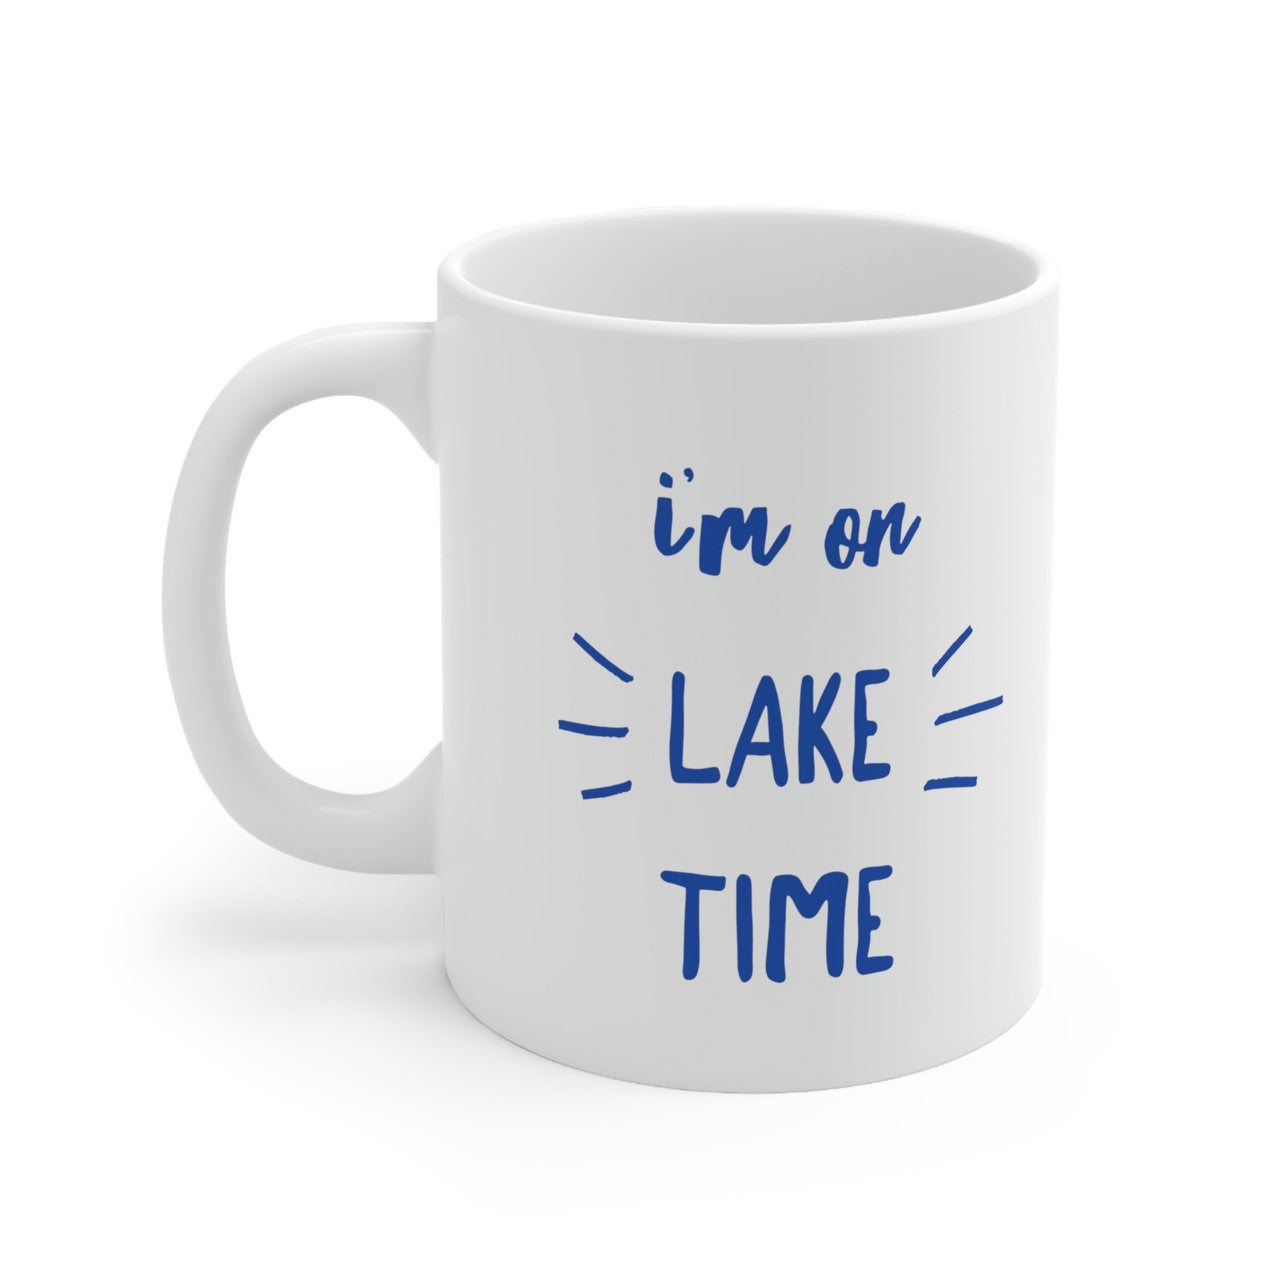 I'm On Lake Time Ceramic Beach Coffee Mug Mugs New England Trading Co   